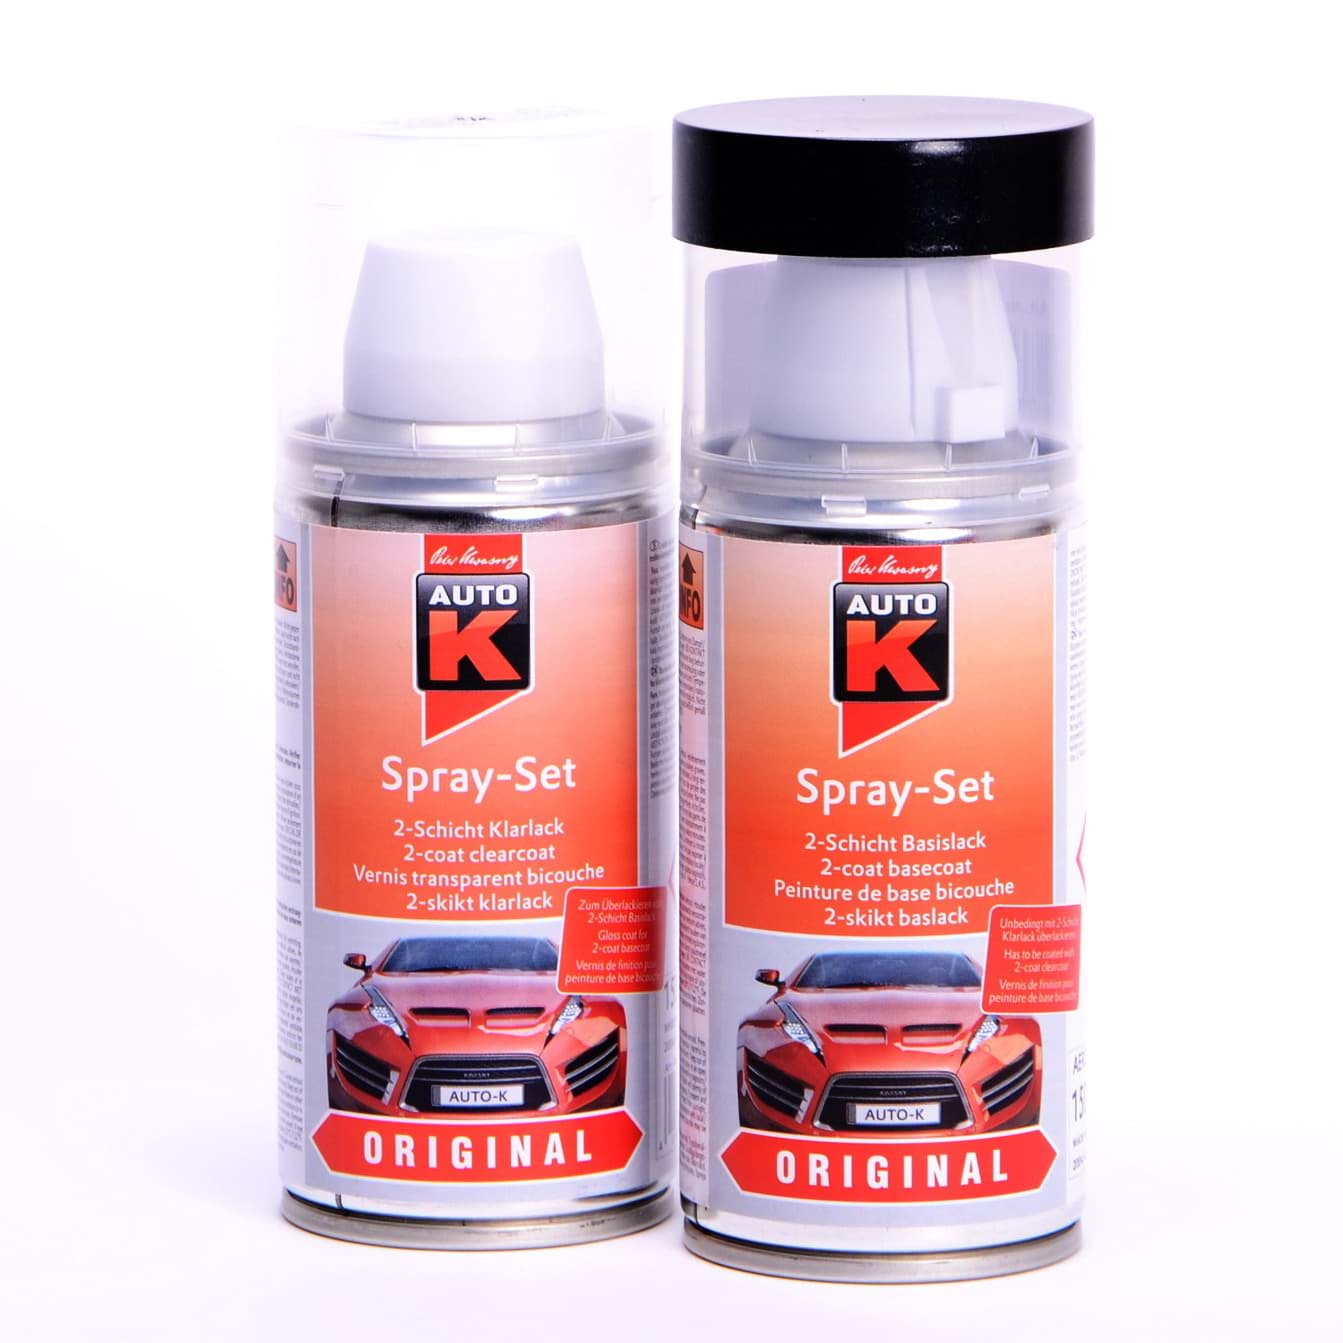 Auto-K Spray-Set Autolack für Mercedes 775 Iridiumsilber met 23344 resmi